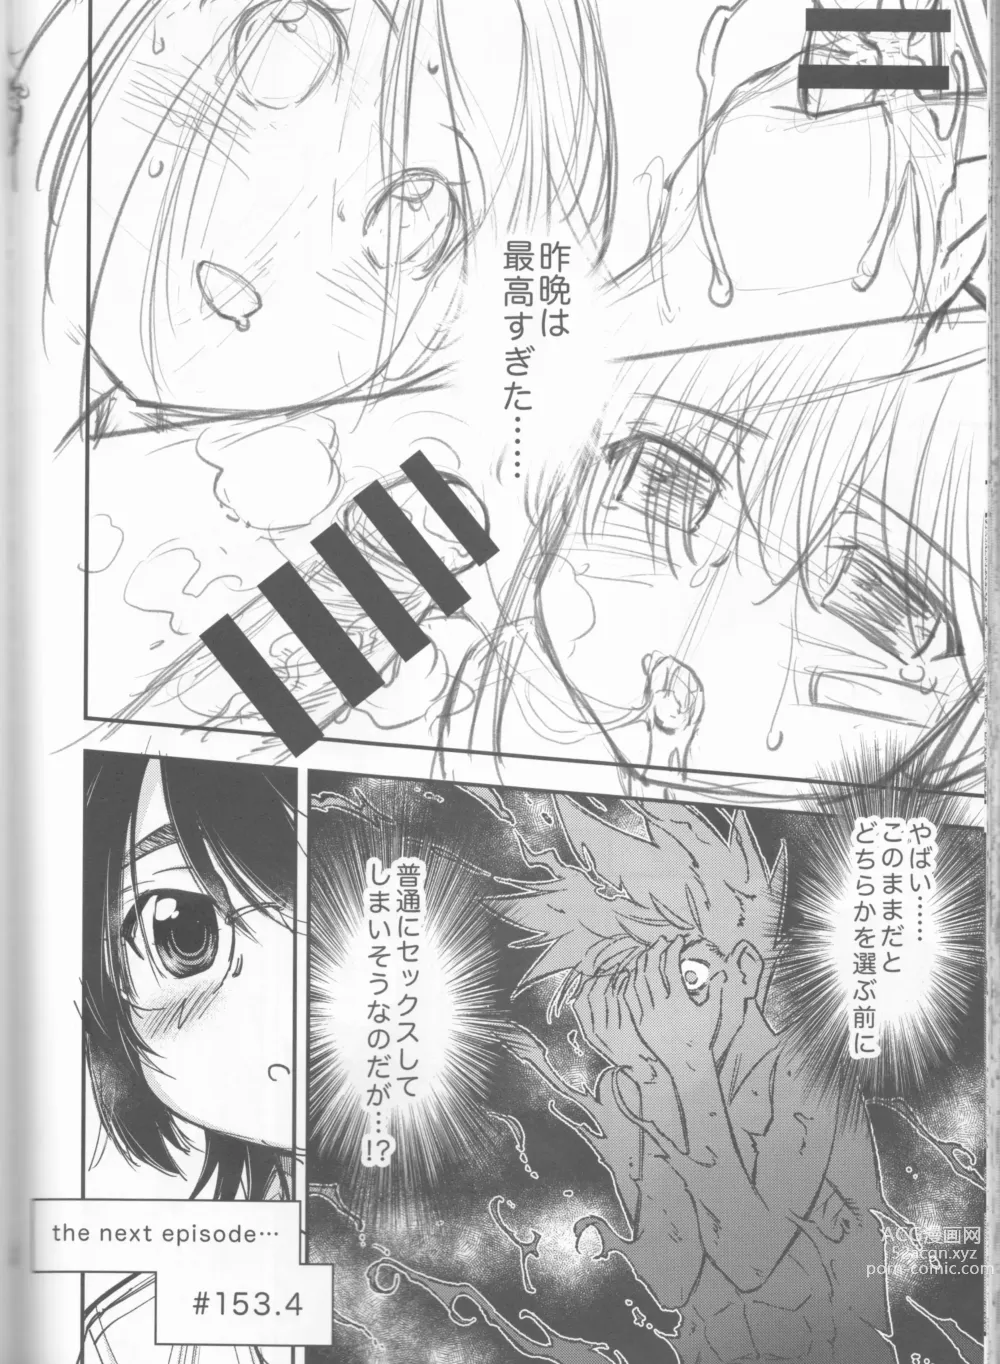 Page 69 of doujinshi kxs.